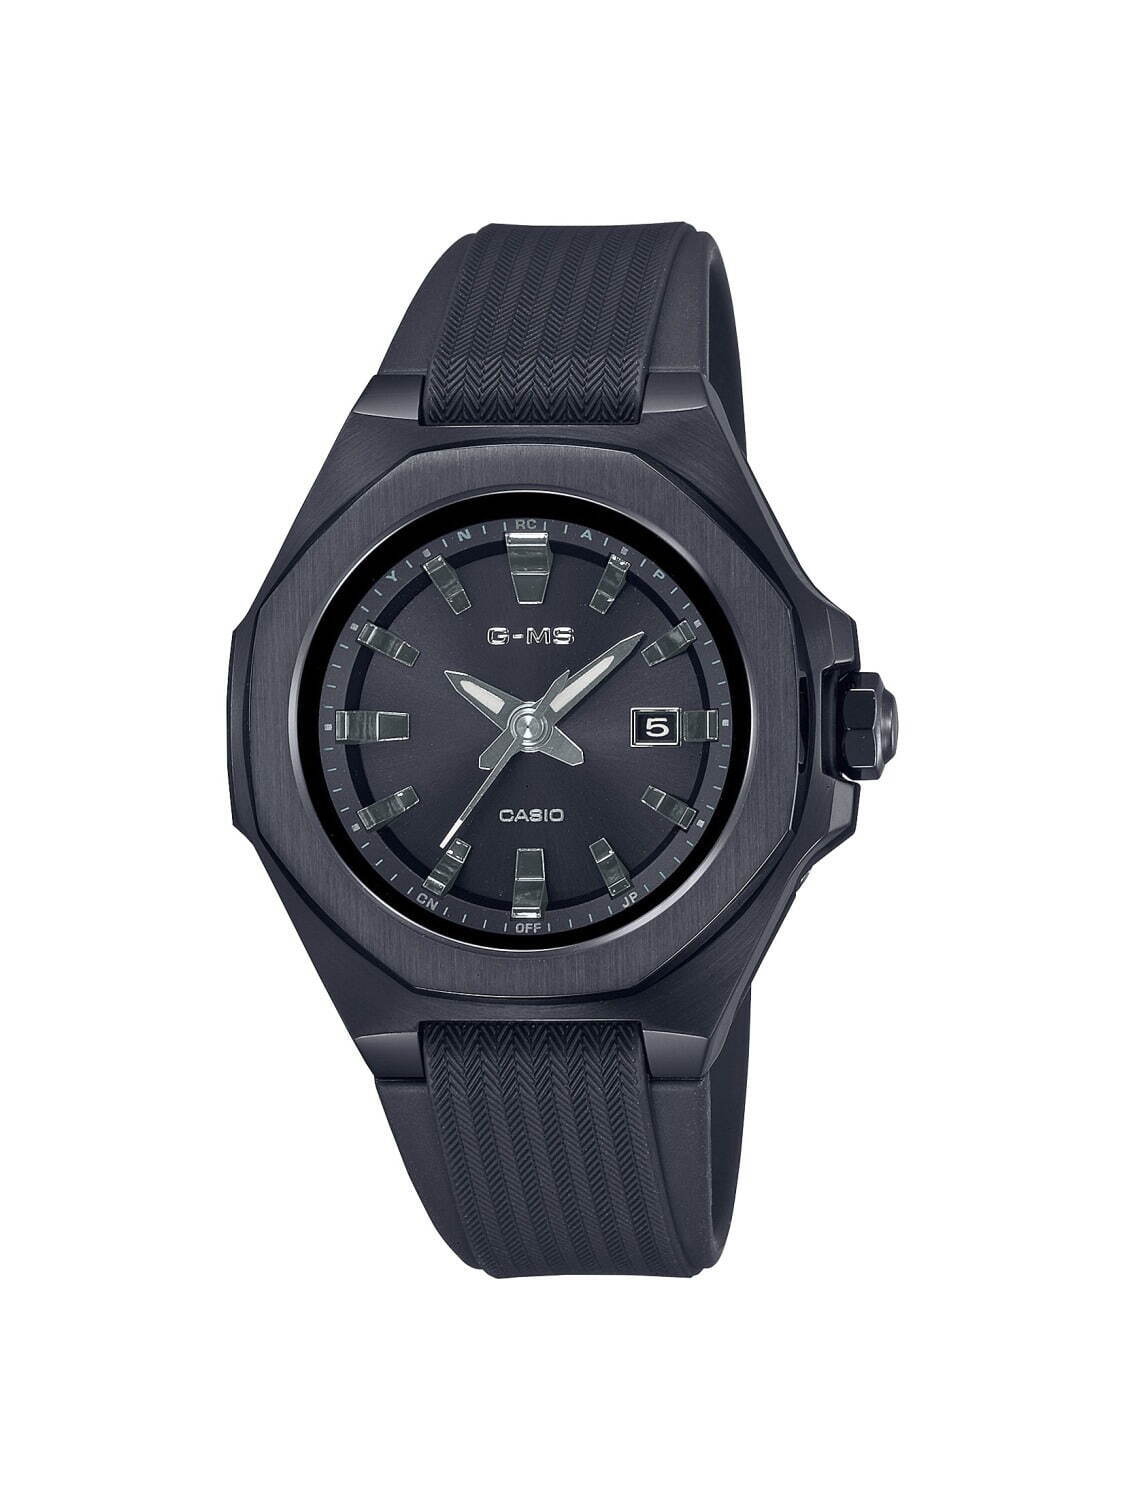 BABY-G「ジーミズ」新作オールブラックのウィメンズ腕時計、シャープな